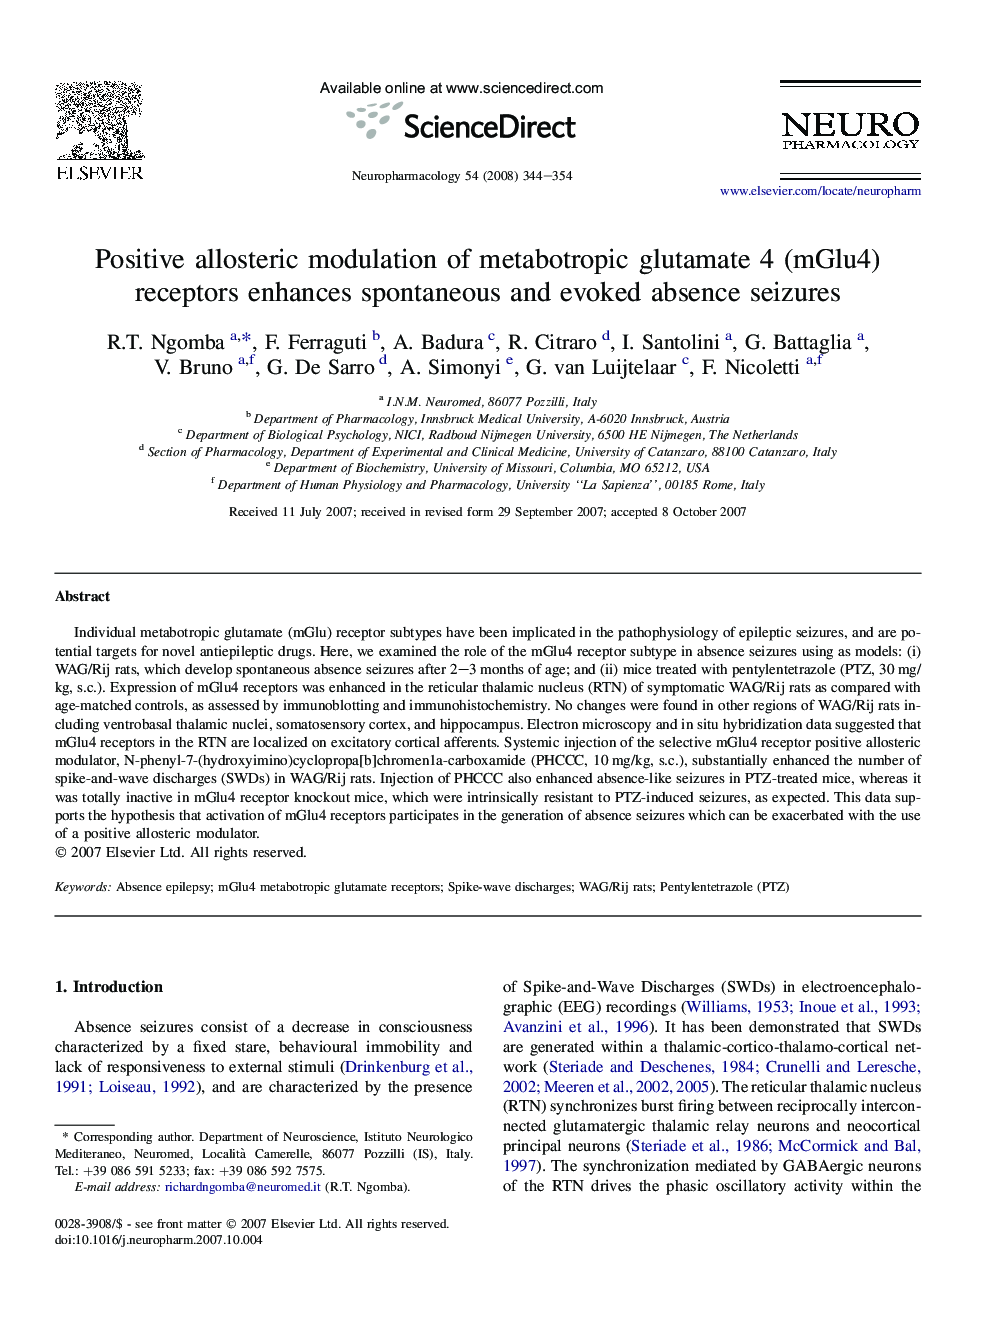 Positive allosteric modulation of metabotropic glutamate 4 (mGlu4) receptors enhances spontaneous and evoked absence seizures